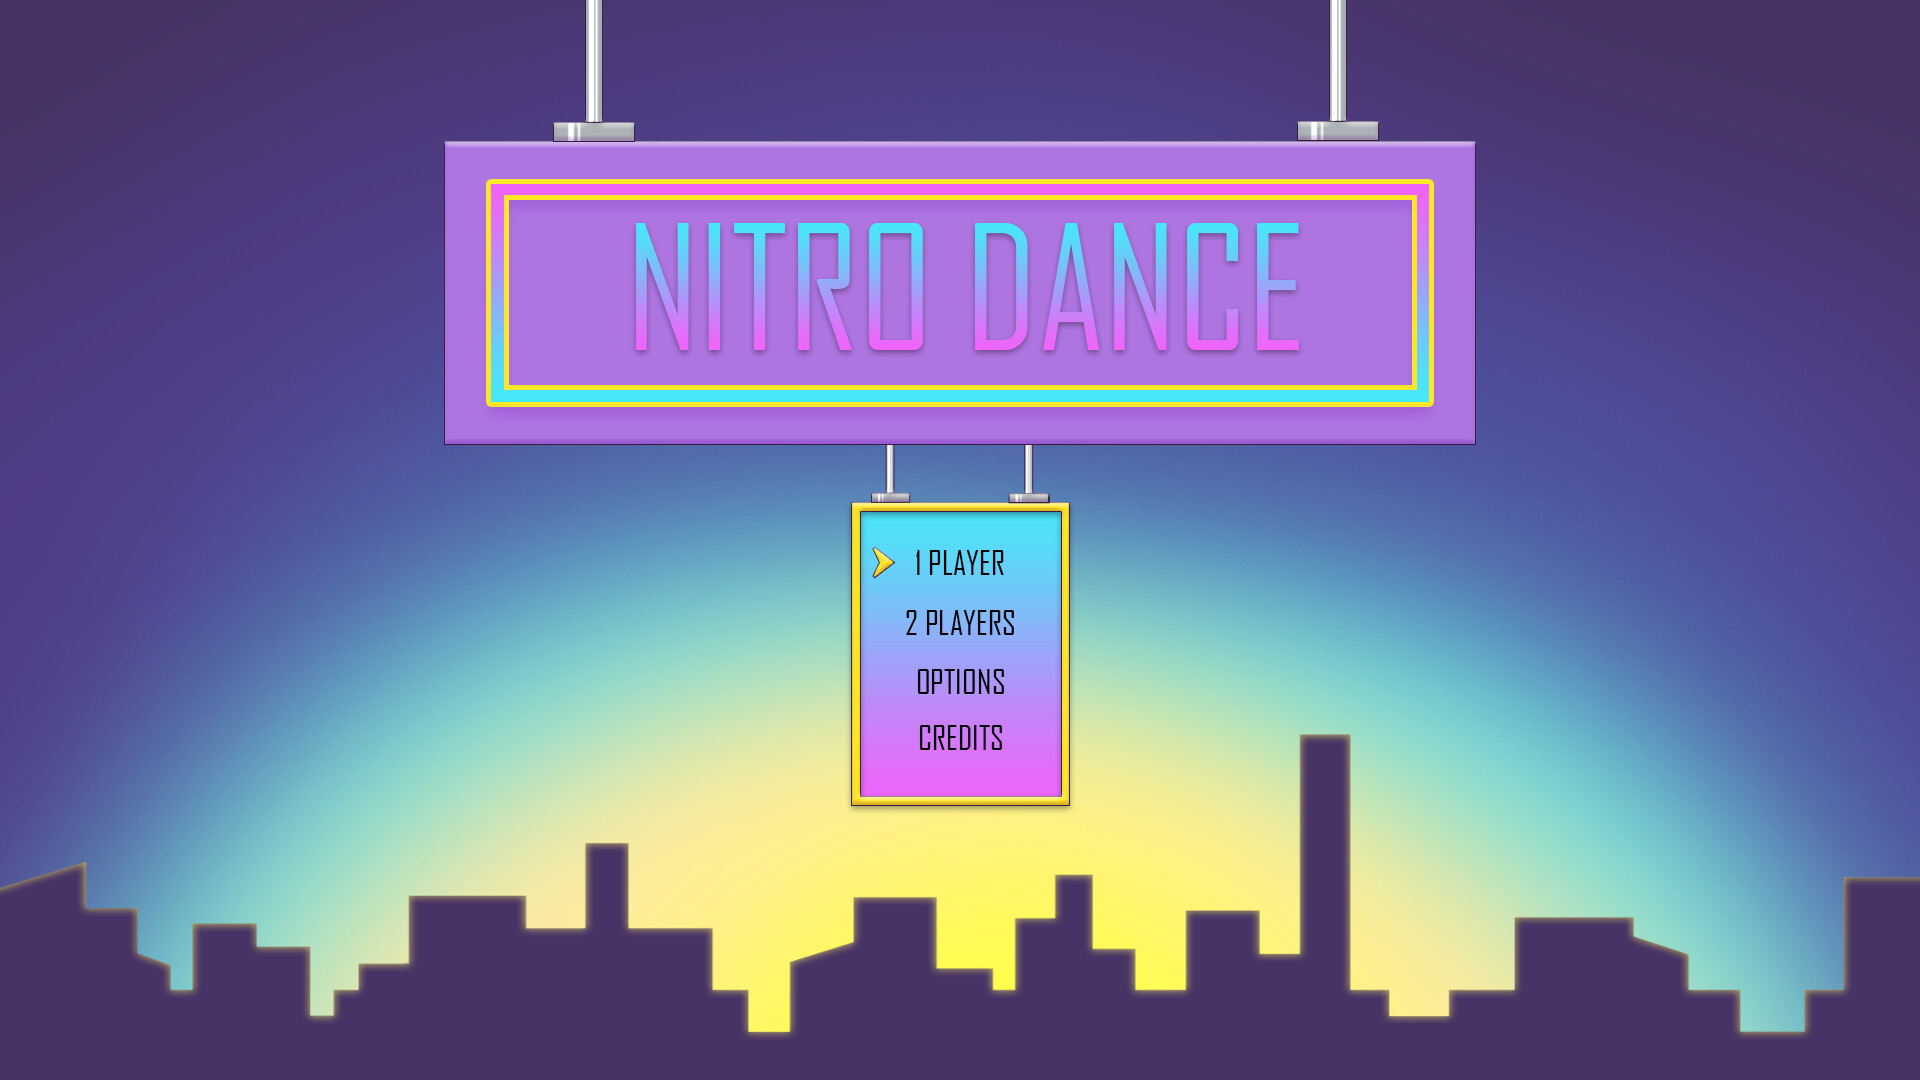 ArtStation - Nitro Dance - UI Menu